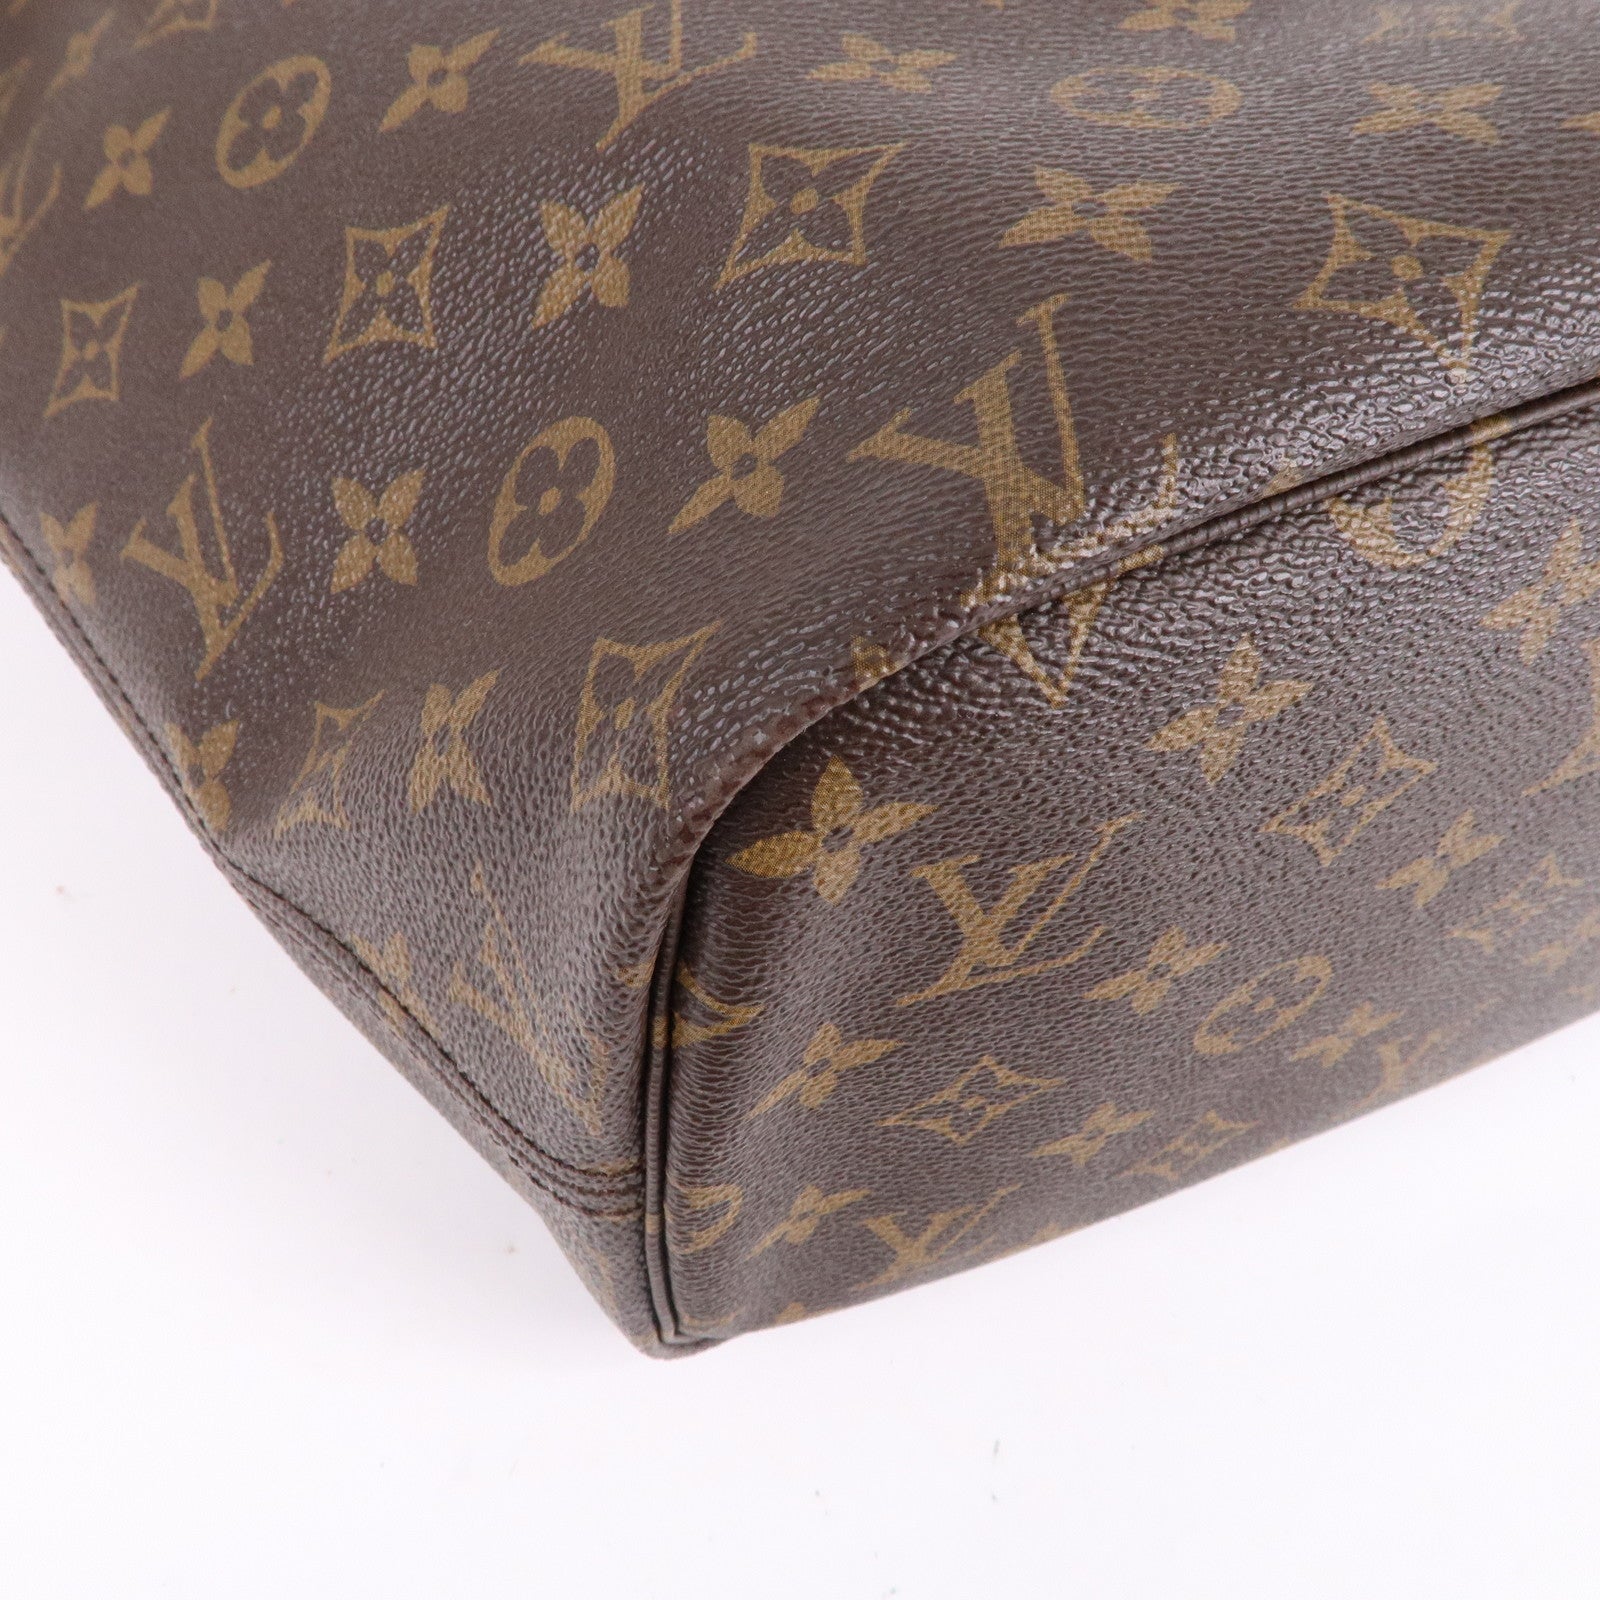 Neverfull MM Monogram Canvas - Handbags M41177 - Louis Vuitton